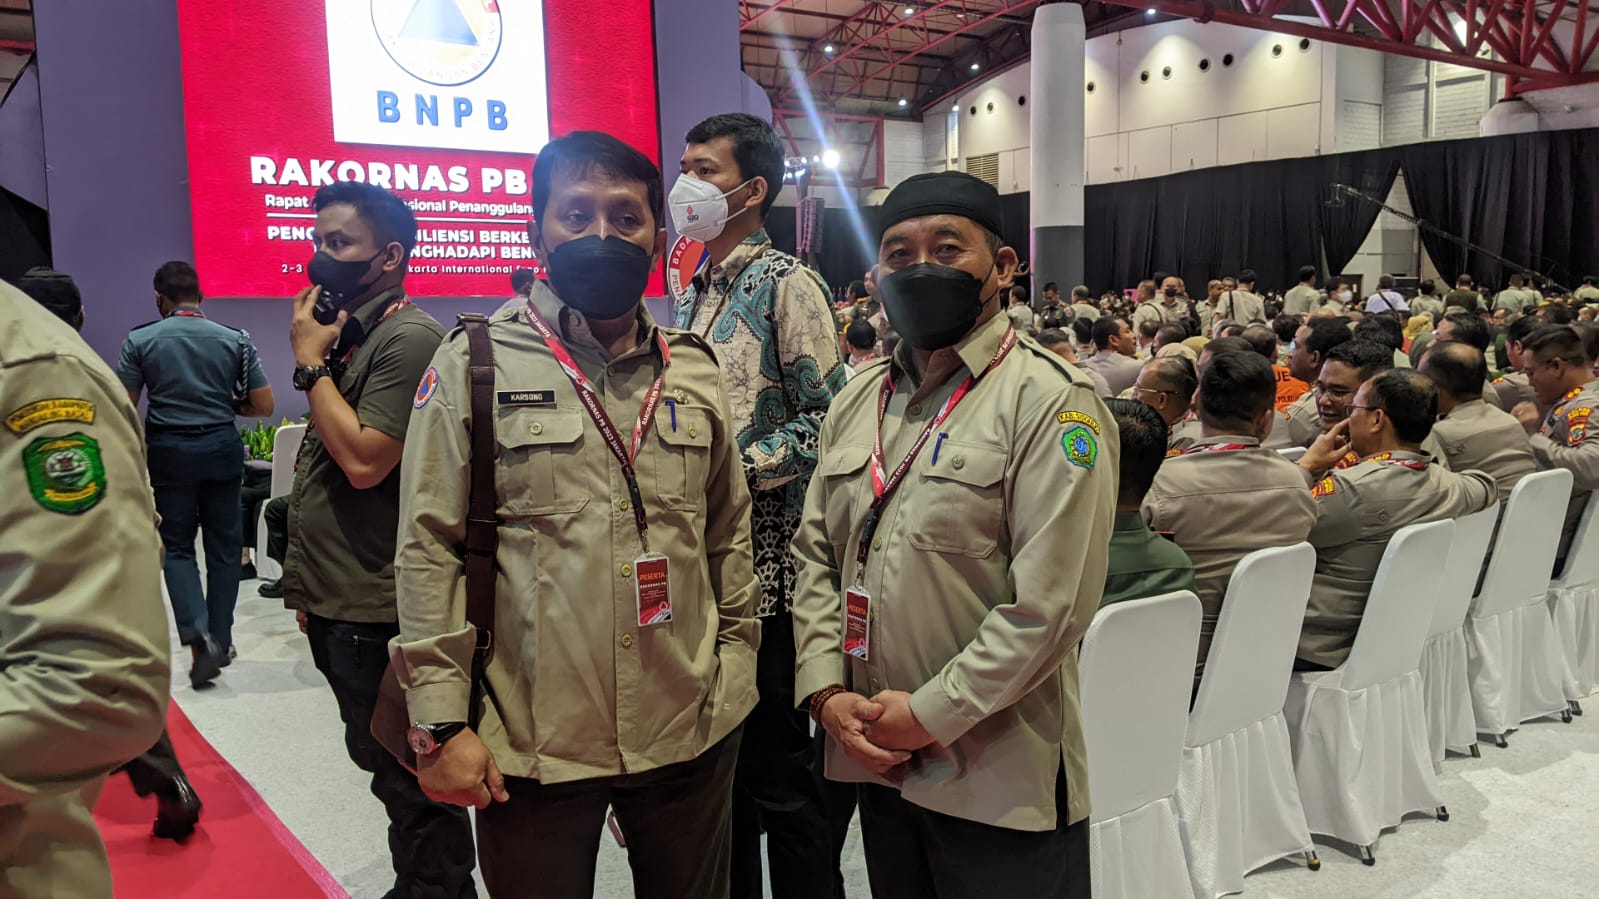 BPBD Kabupaten Sidoarjo mengikuti Rakornas PB di Jakarta International Expo, Jakarta